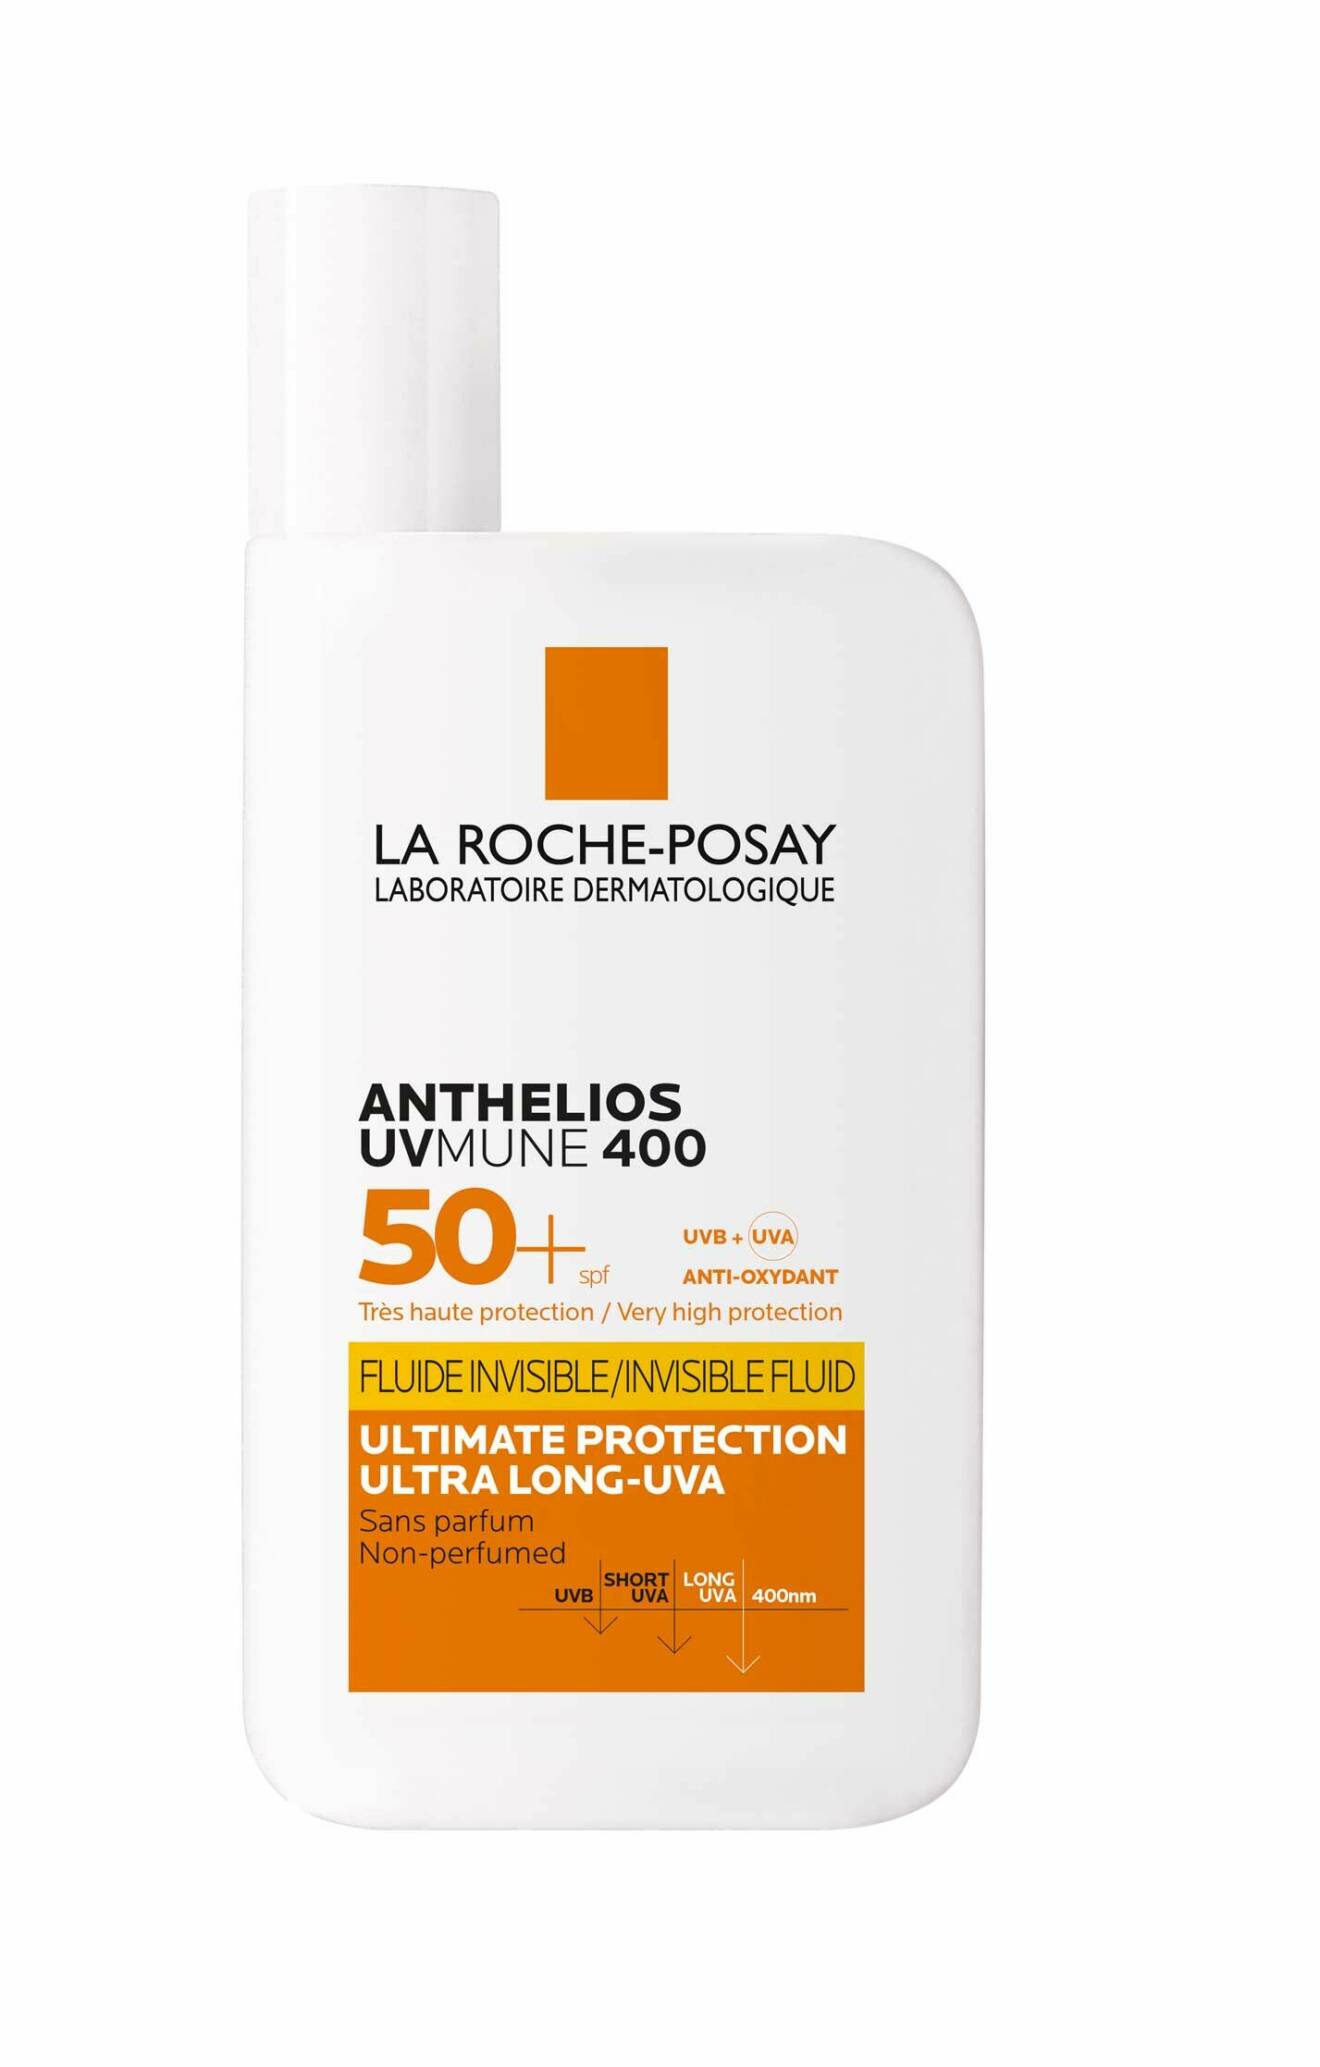 La Roche-Posays Anthelios SPF 50+.